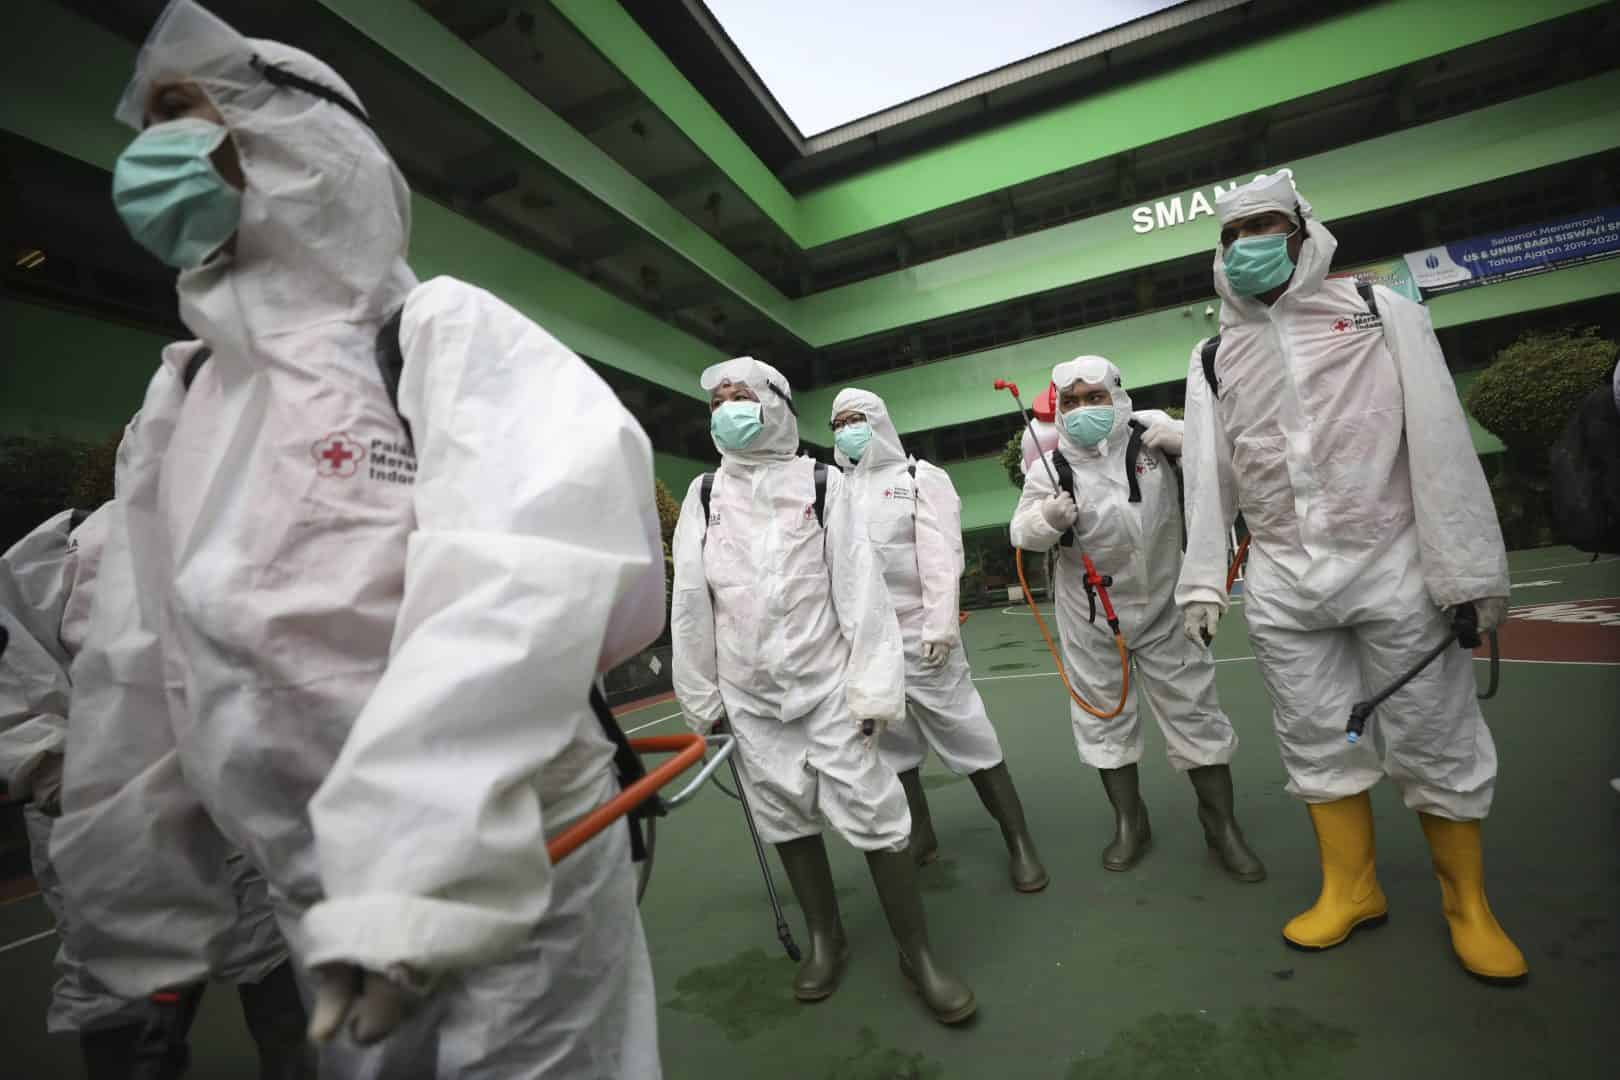 Ofsted inspections ‘unacceptable’ amid coronavirus outbreak – teachers’ union